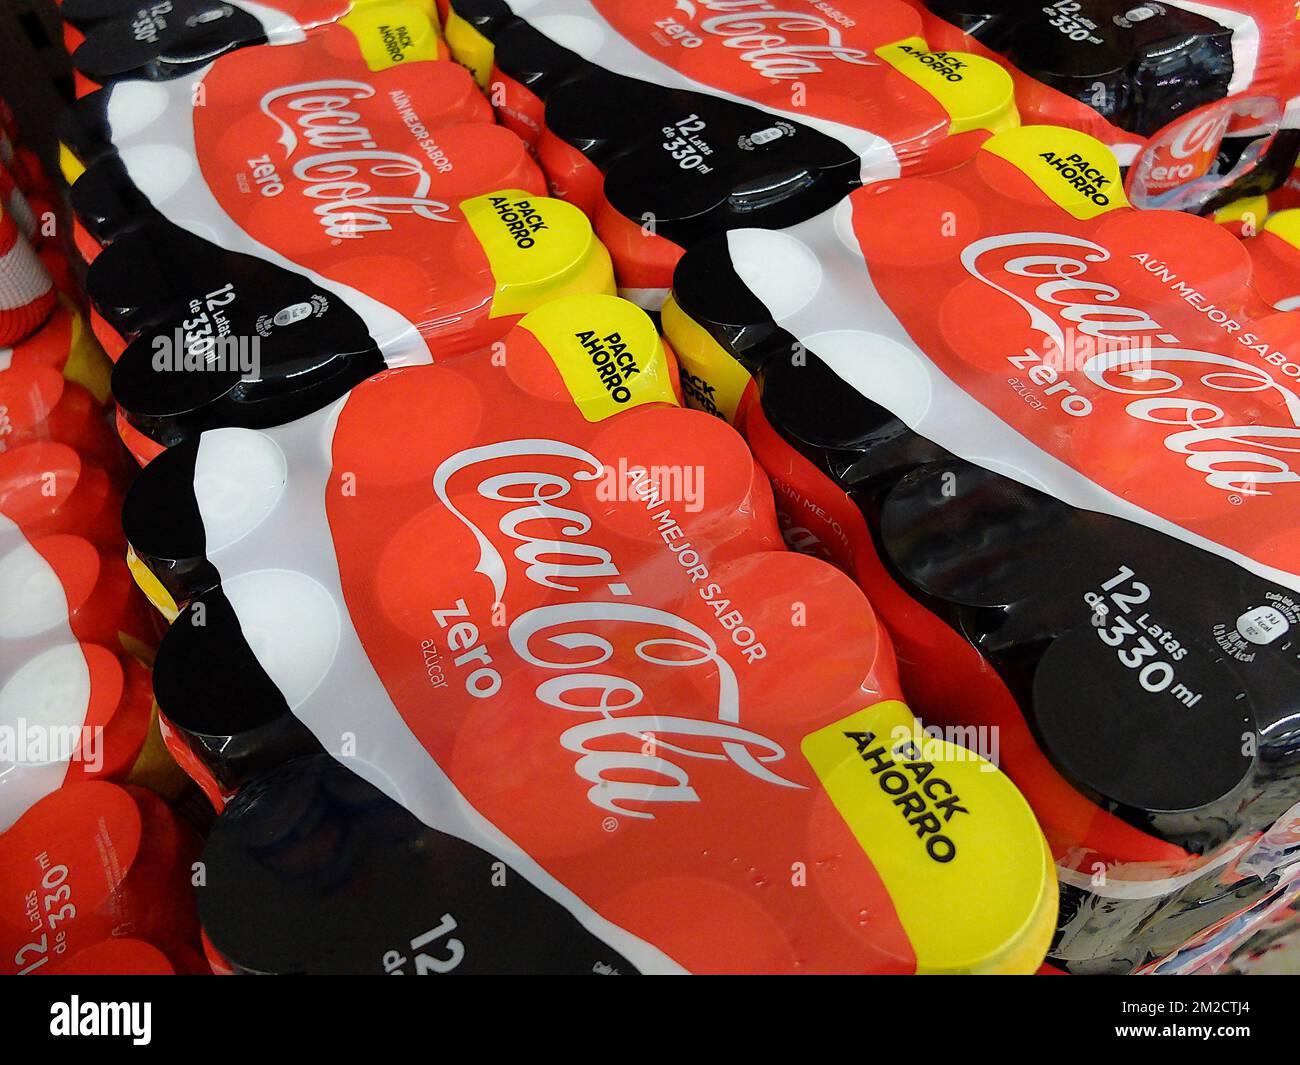 Coca Cola pack | Pack Coca Cola 15/01/2018 Stock Photo